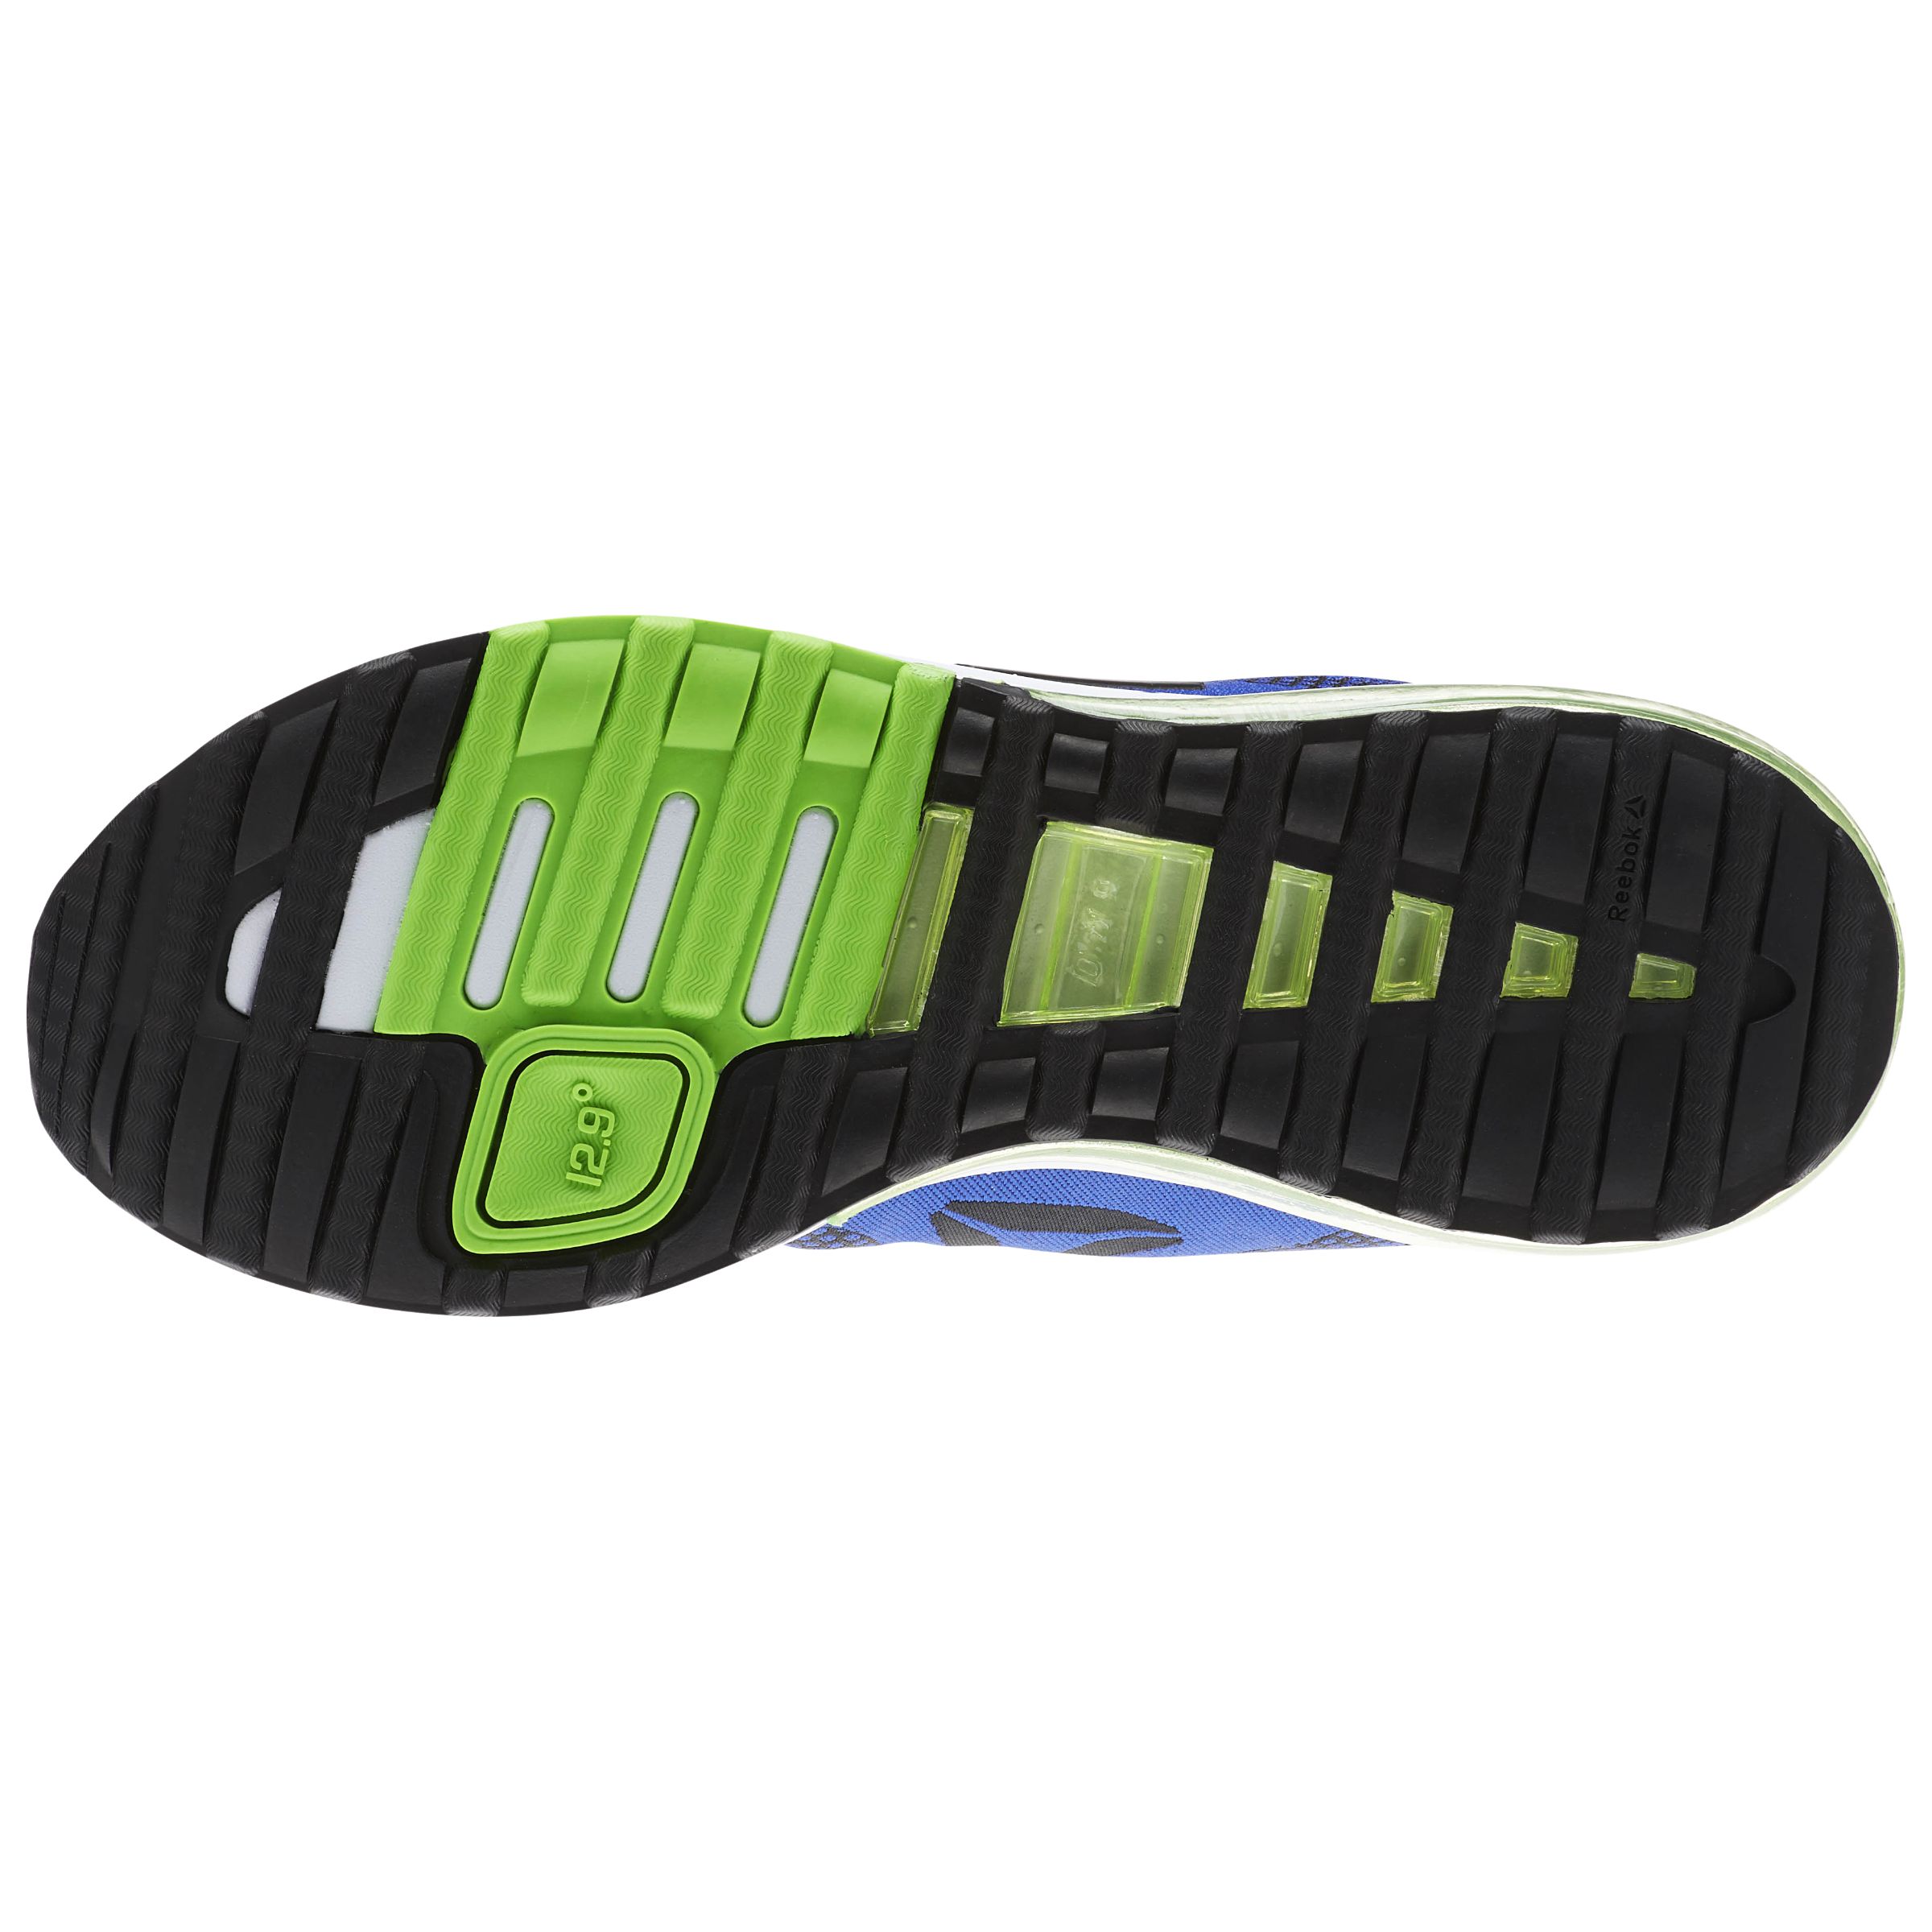 Fingerhut - Reebok Men's DashRide 6.0 Running Shoe